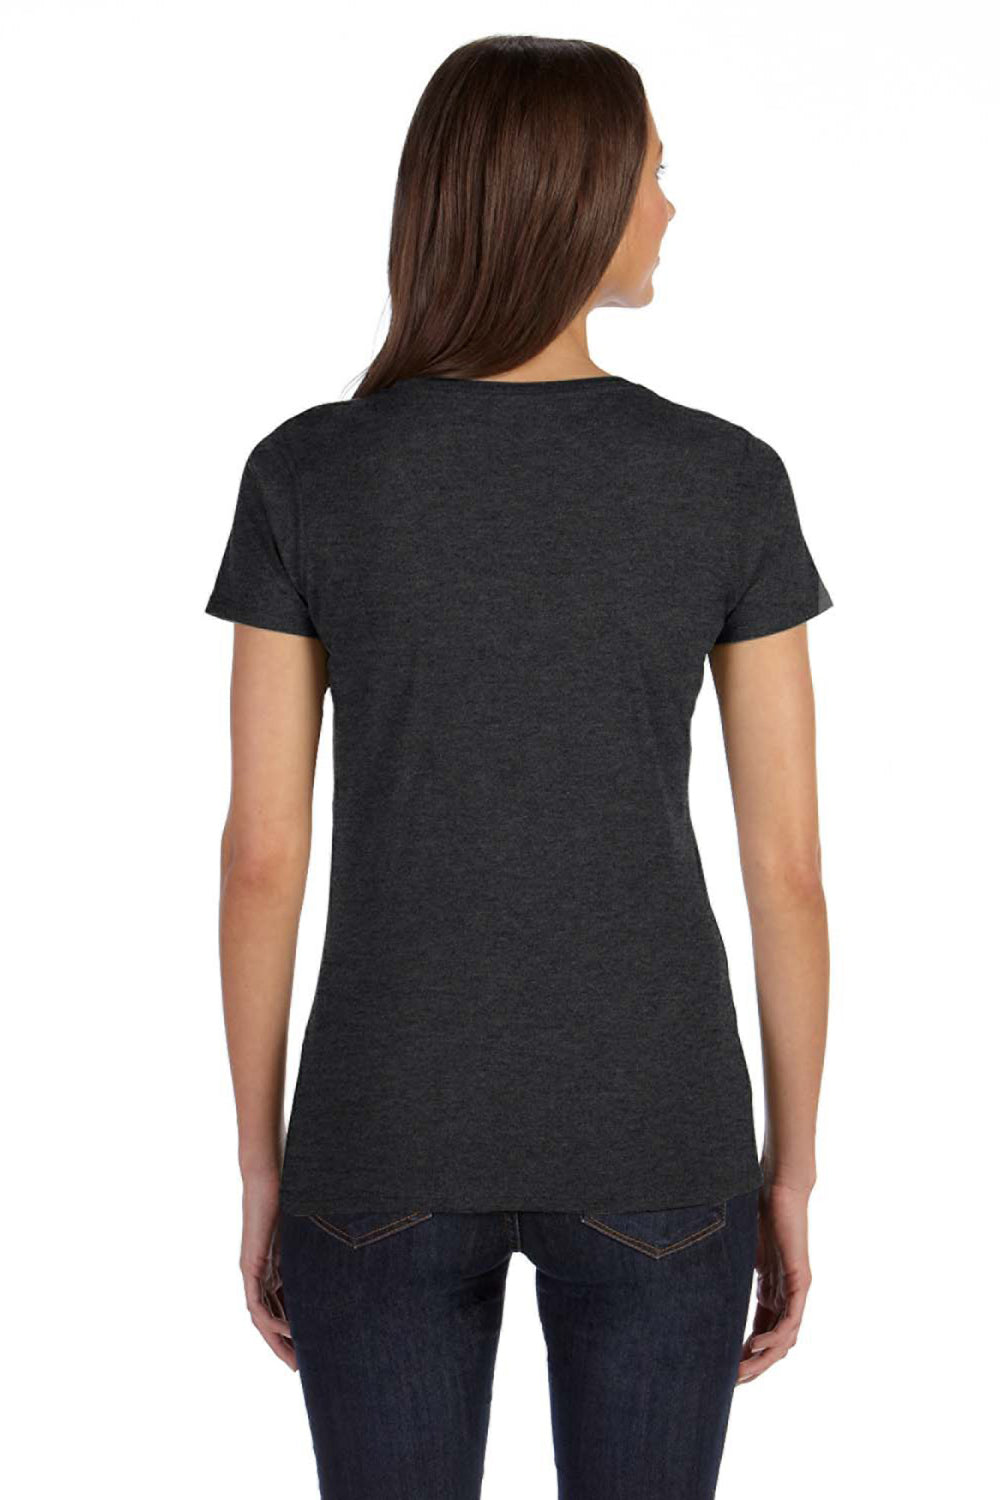 Econscious EC3800 Womens Short Sleeve Crewneck T-Shirt Charcoal Grey Back